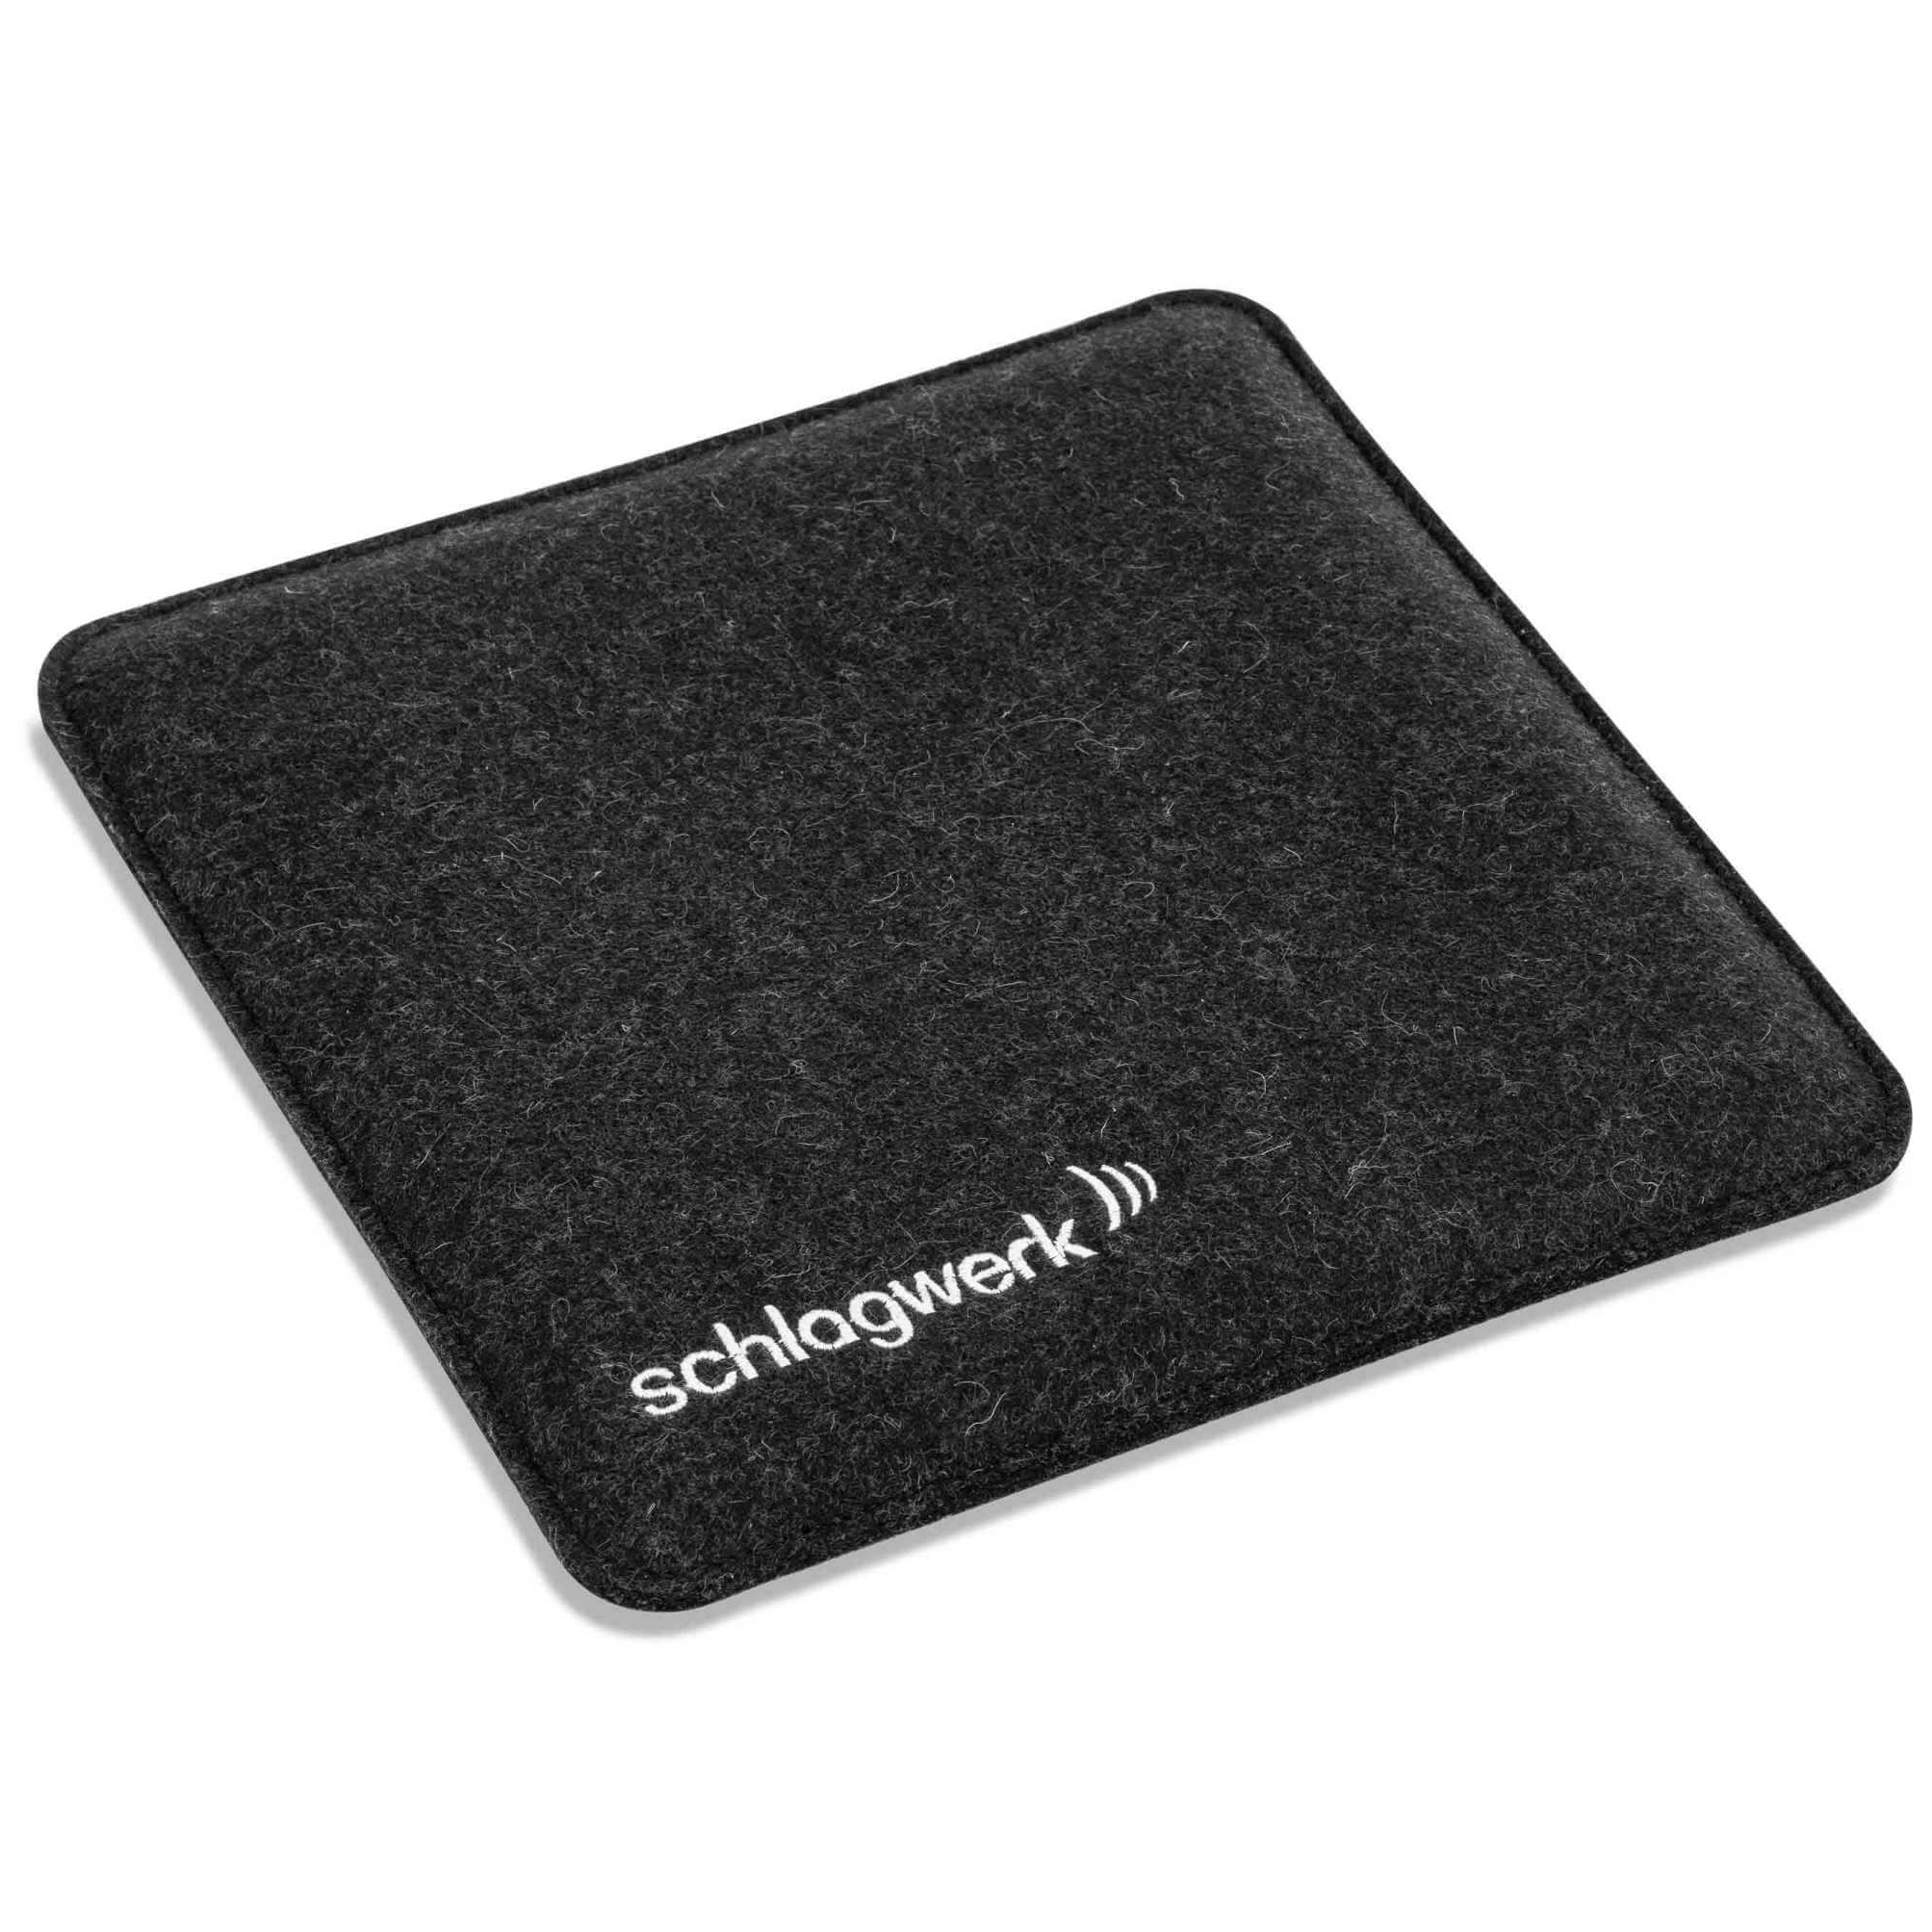 Schlagwerk SP 70BLK wool felt seat cushion - black